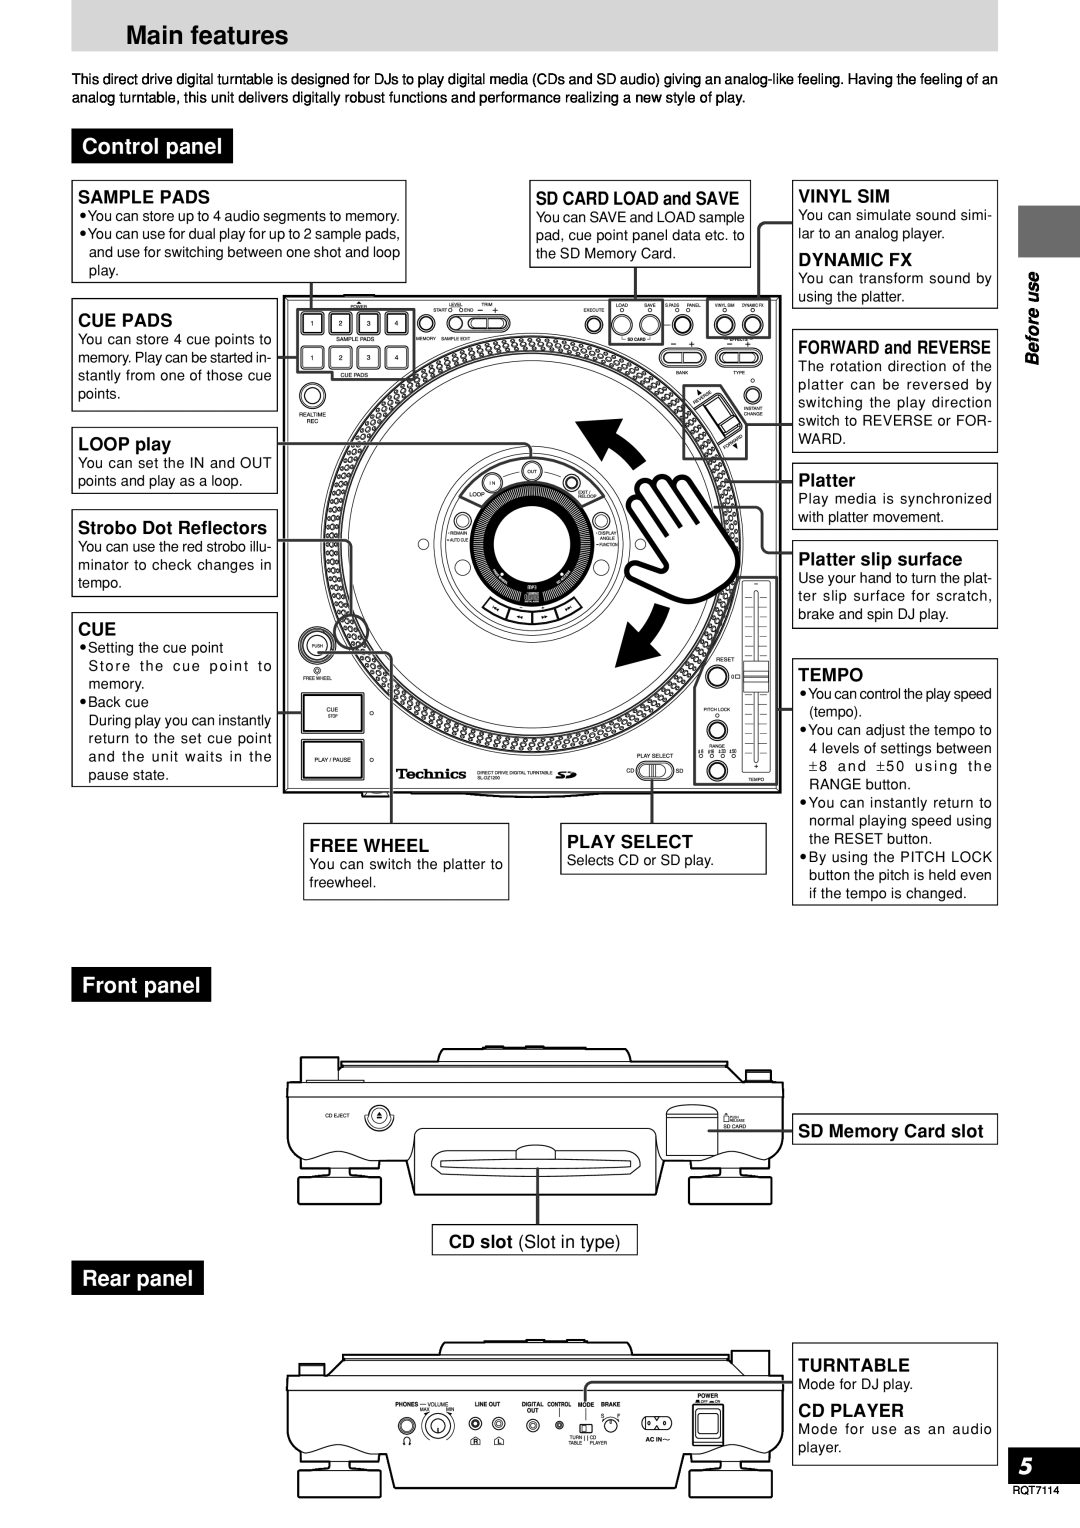 Panasonic SL-DZ1200 Main features, Control panel, Front panel, Rear panel, Sample Pads, Cue Pads, LOOP play, Vinyl Sim 